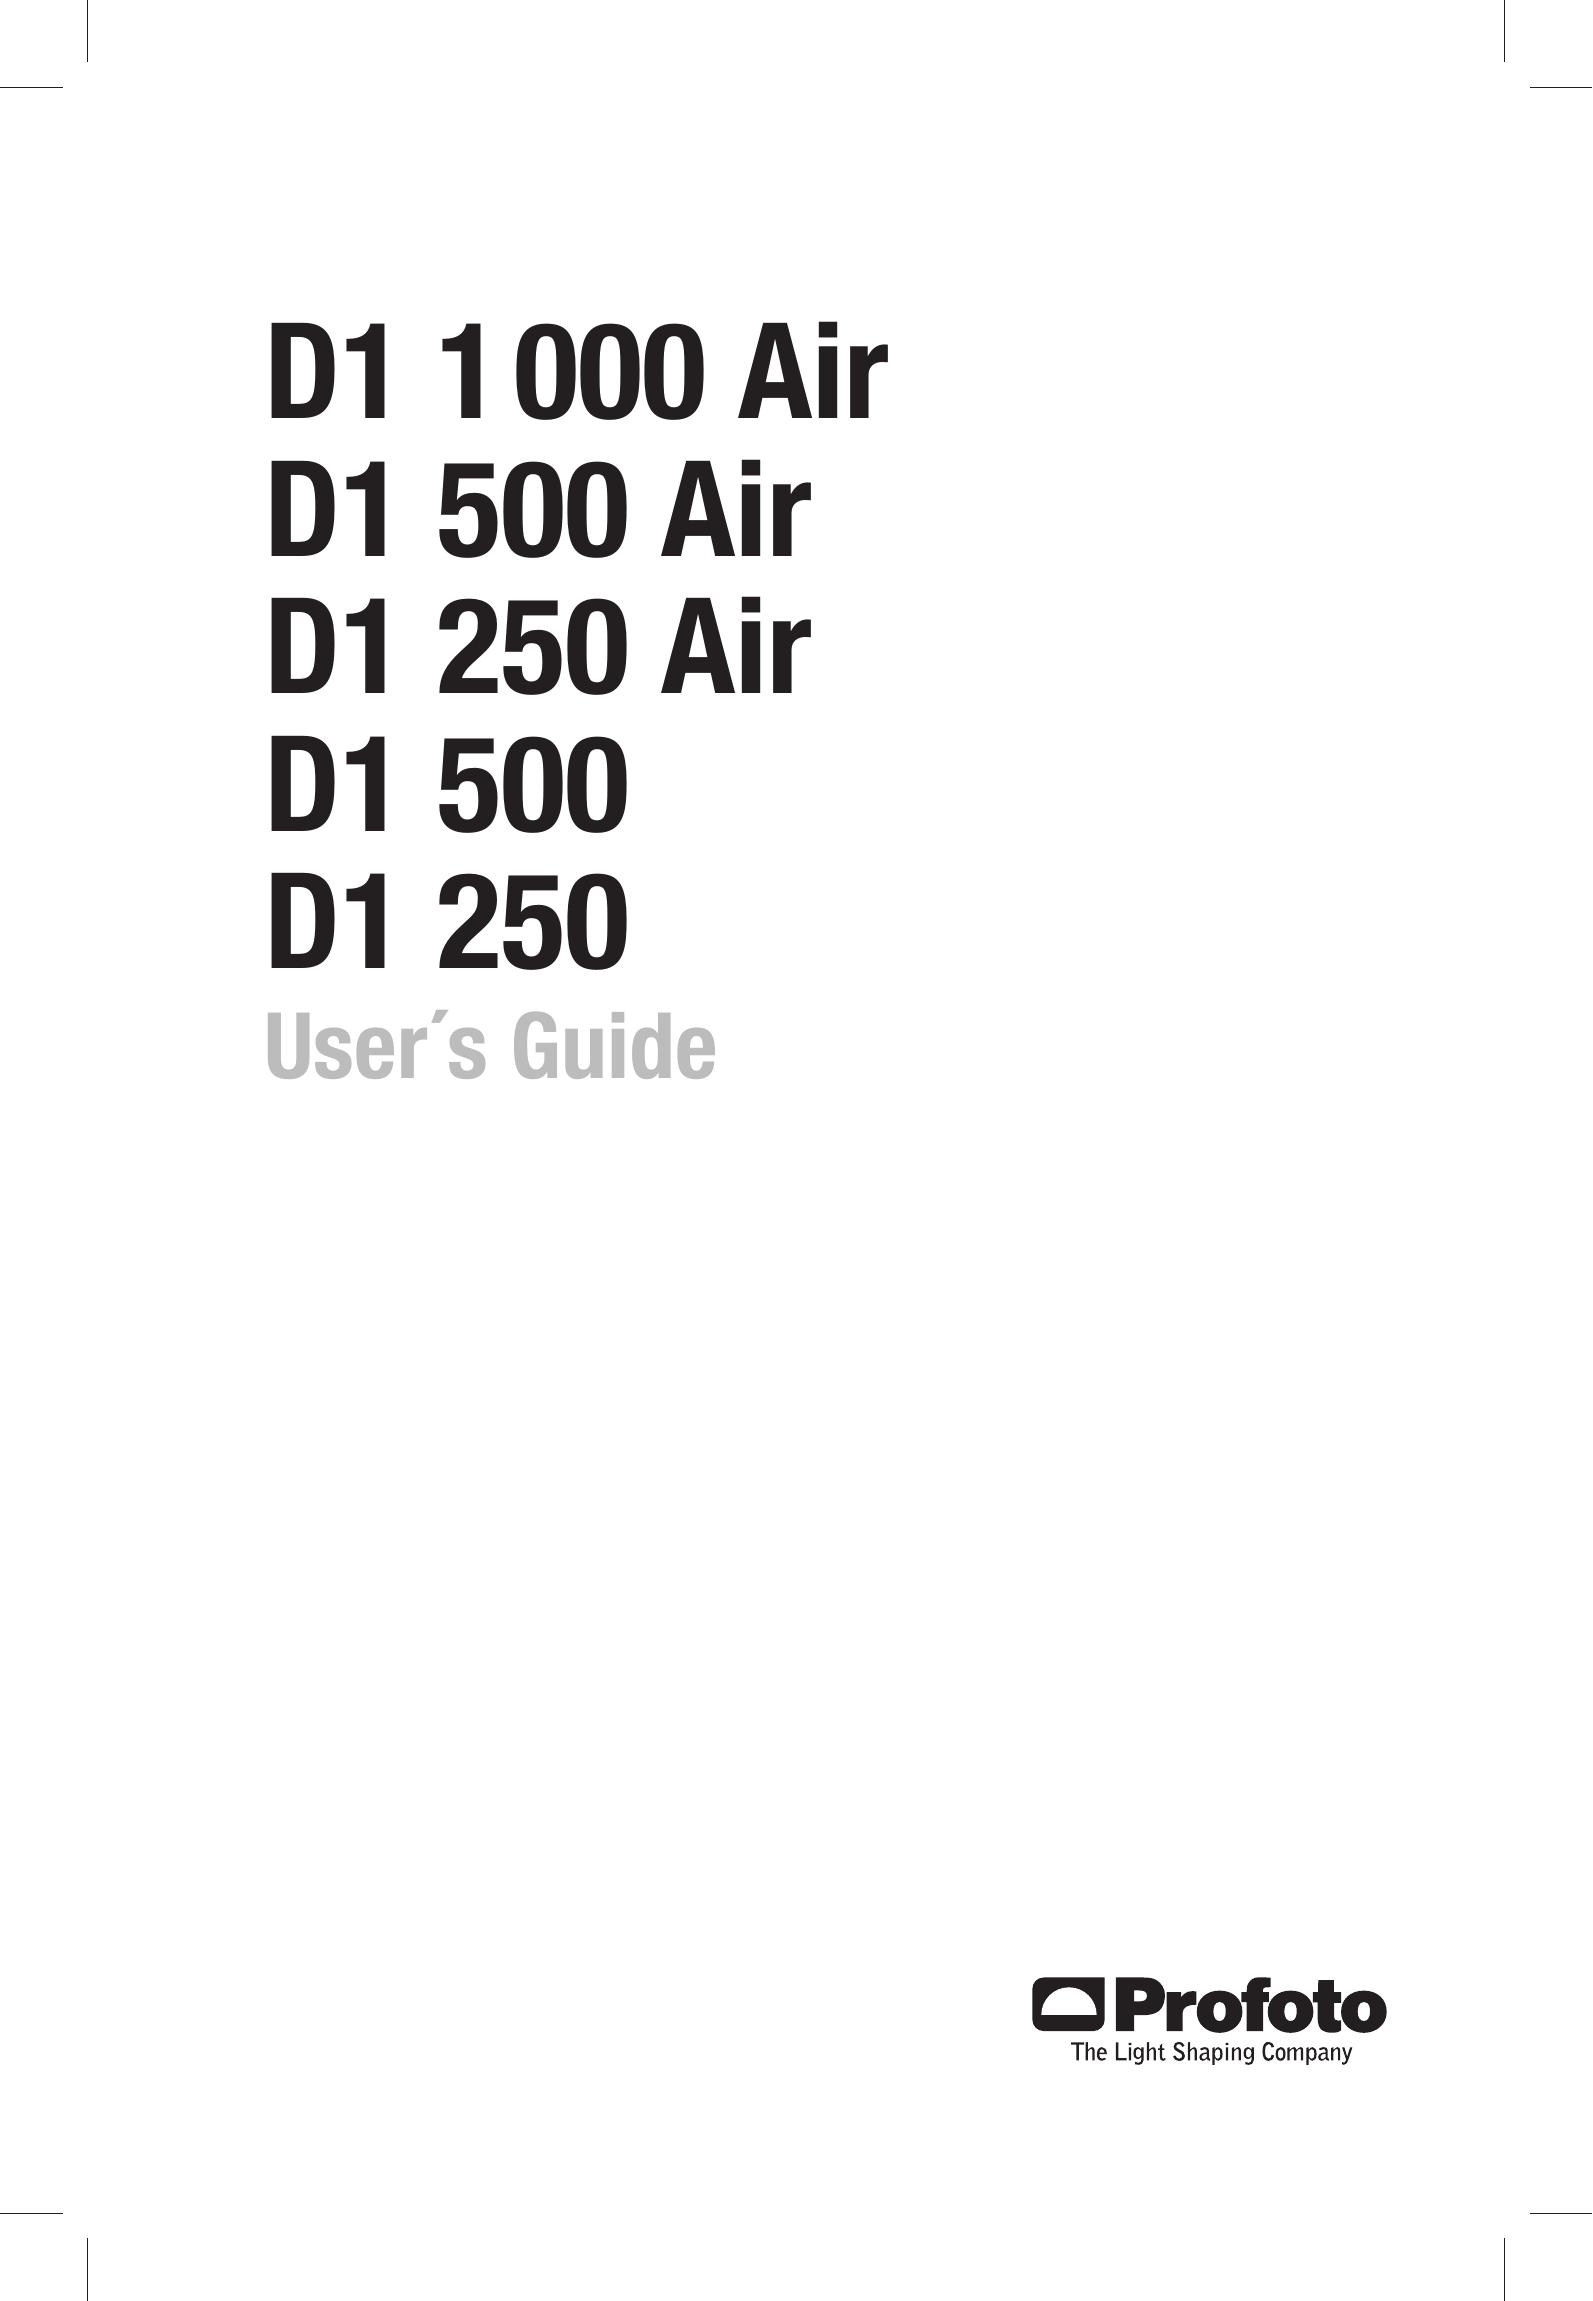 Profoto D1 500 Air Digital Camera User Manual